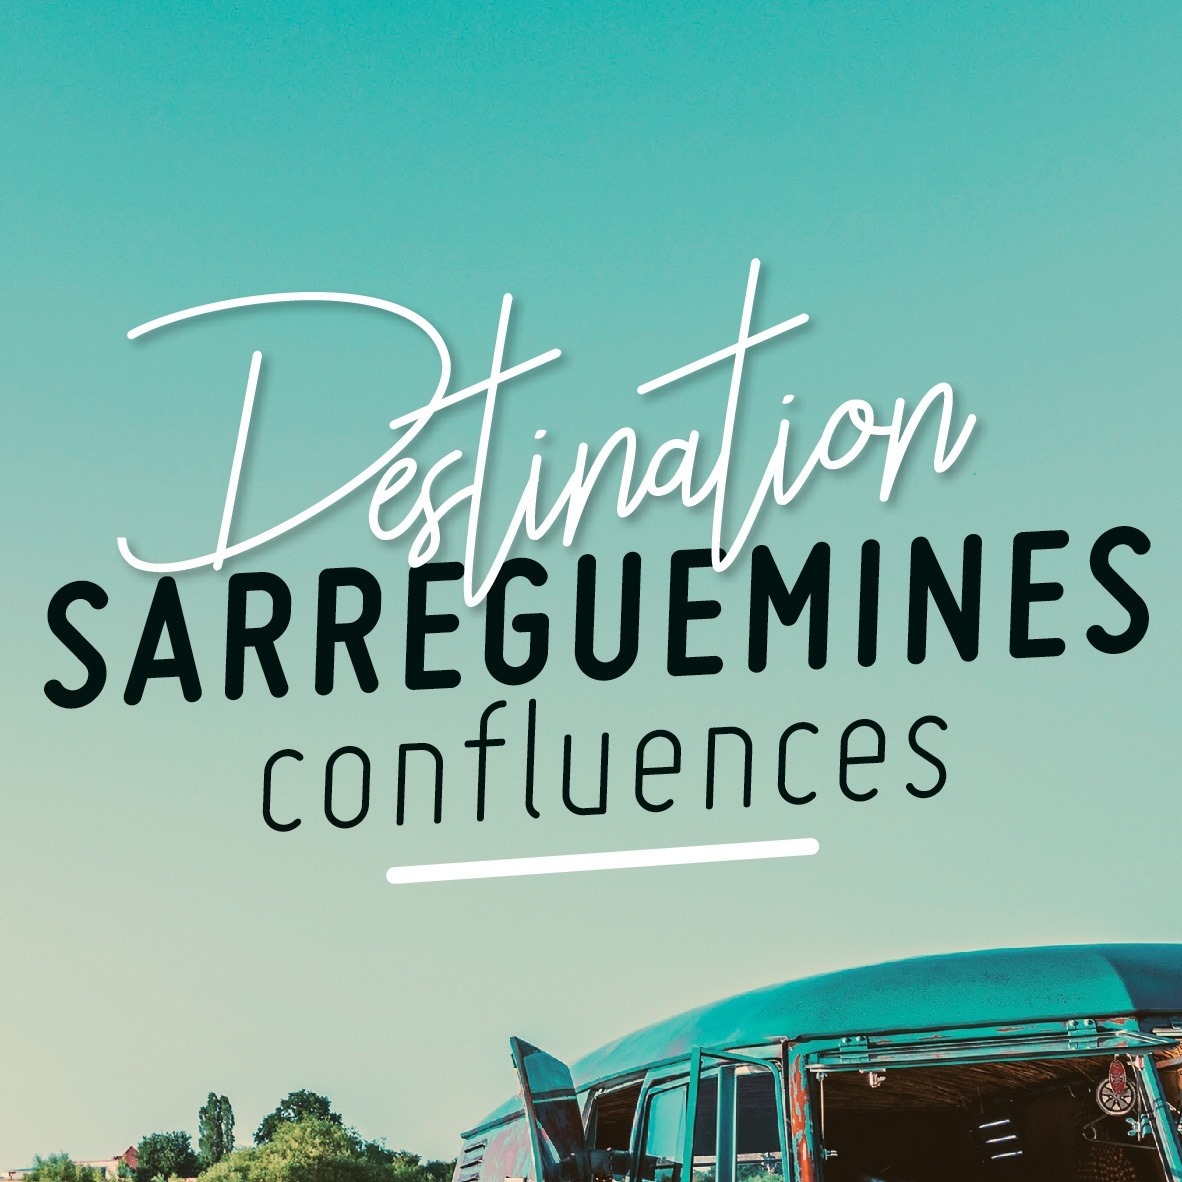 <div class="trix-content">
  <div>Office de Tourisme de Sarreguemines</div>
</div>
